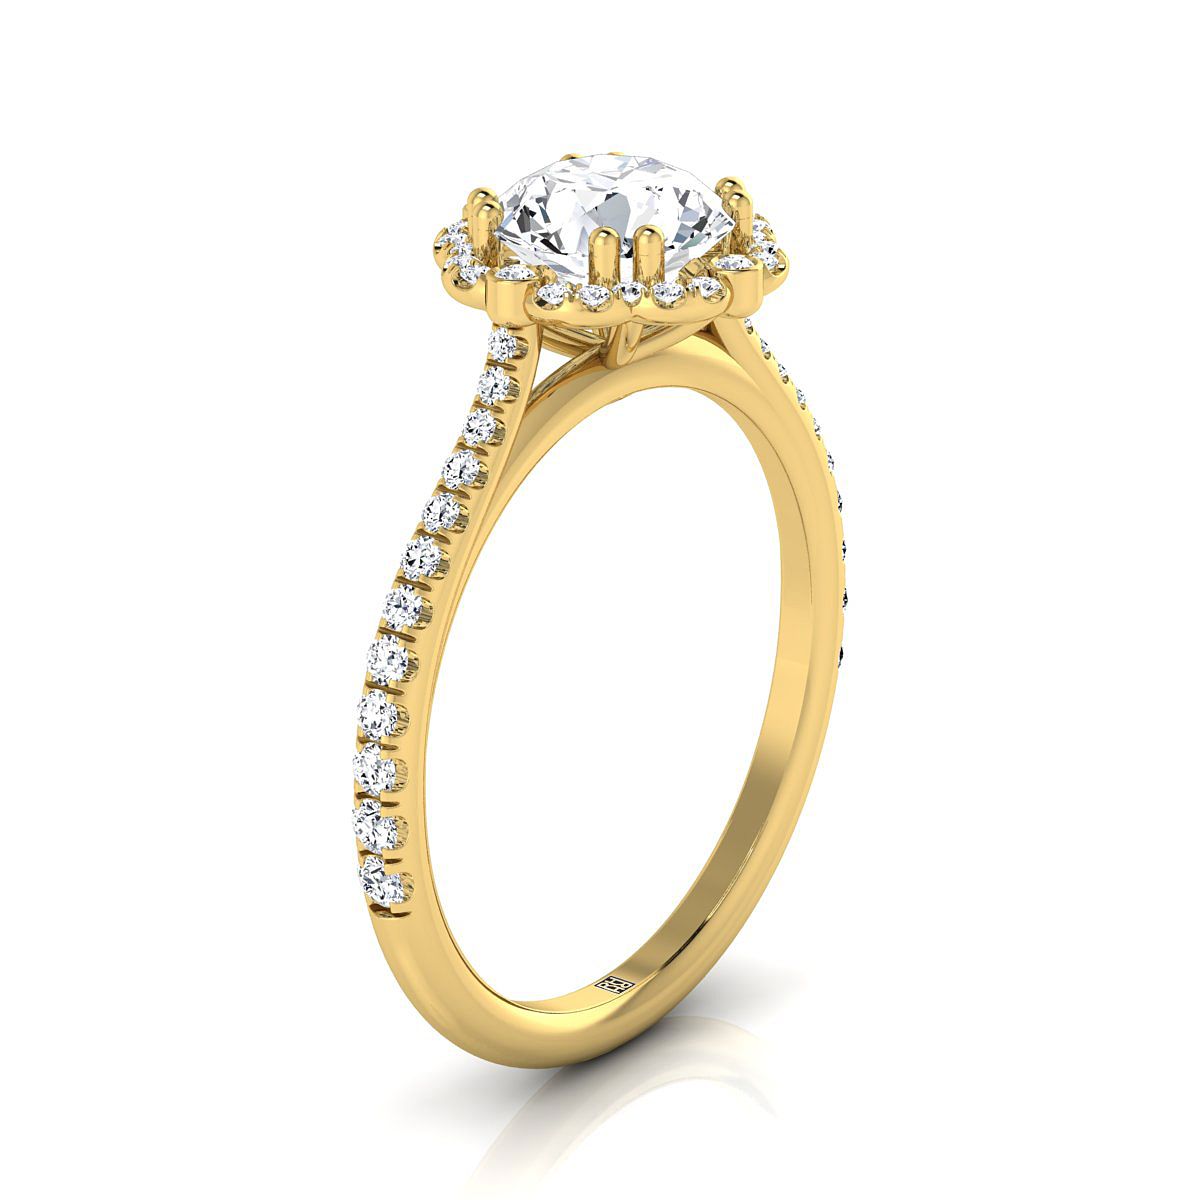 18K Yellow Gold Round Brilliant Aquamarine Ornate Diamond Halo Vintage Inspired Engagement Ring -1/4ctw